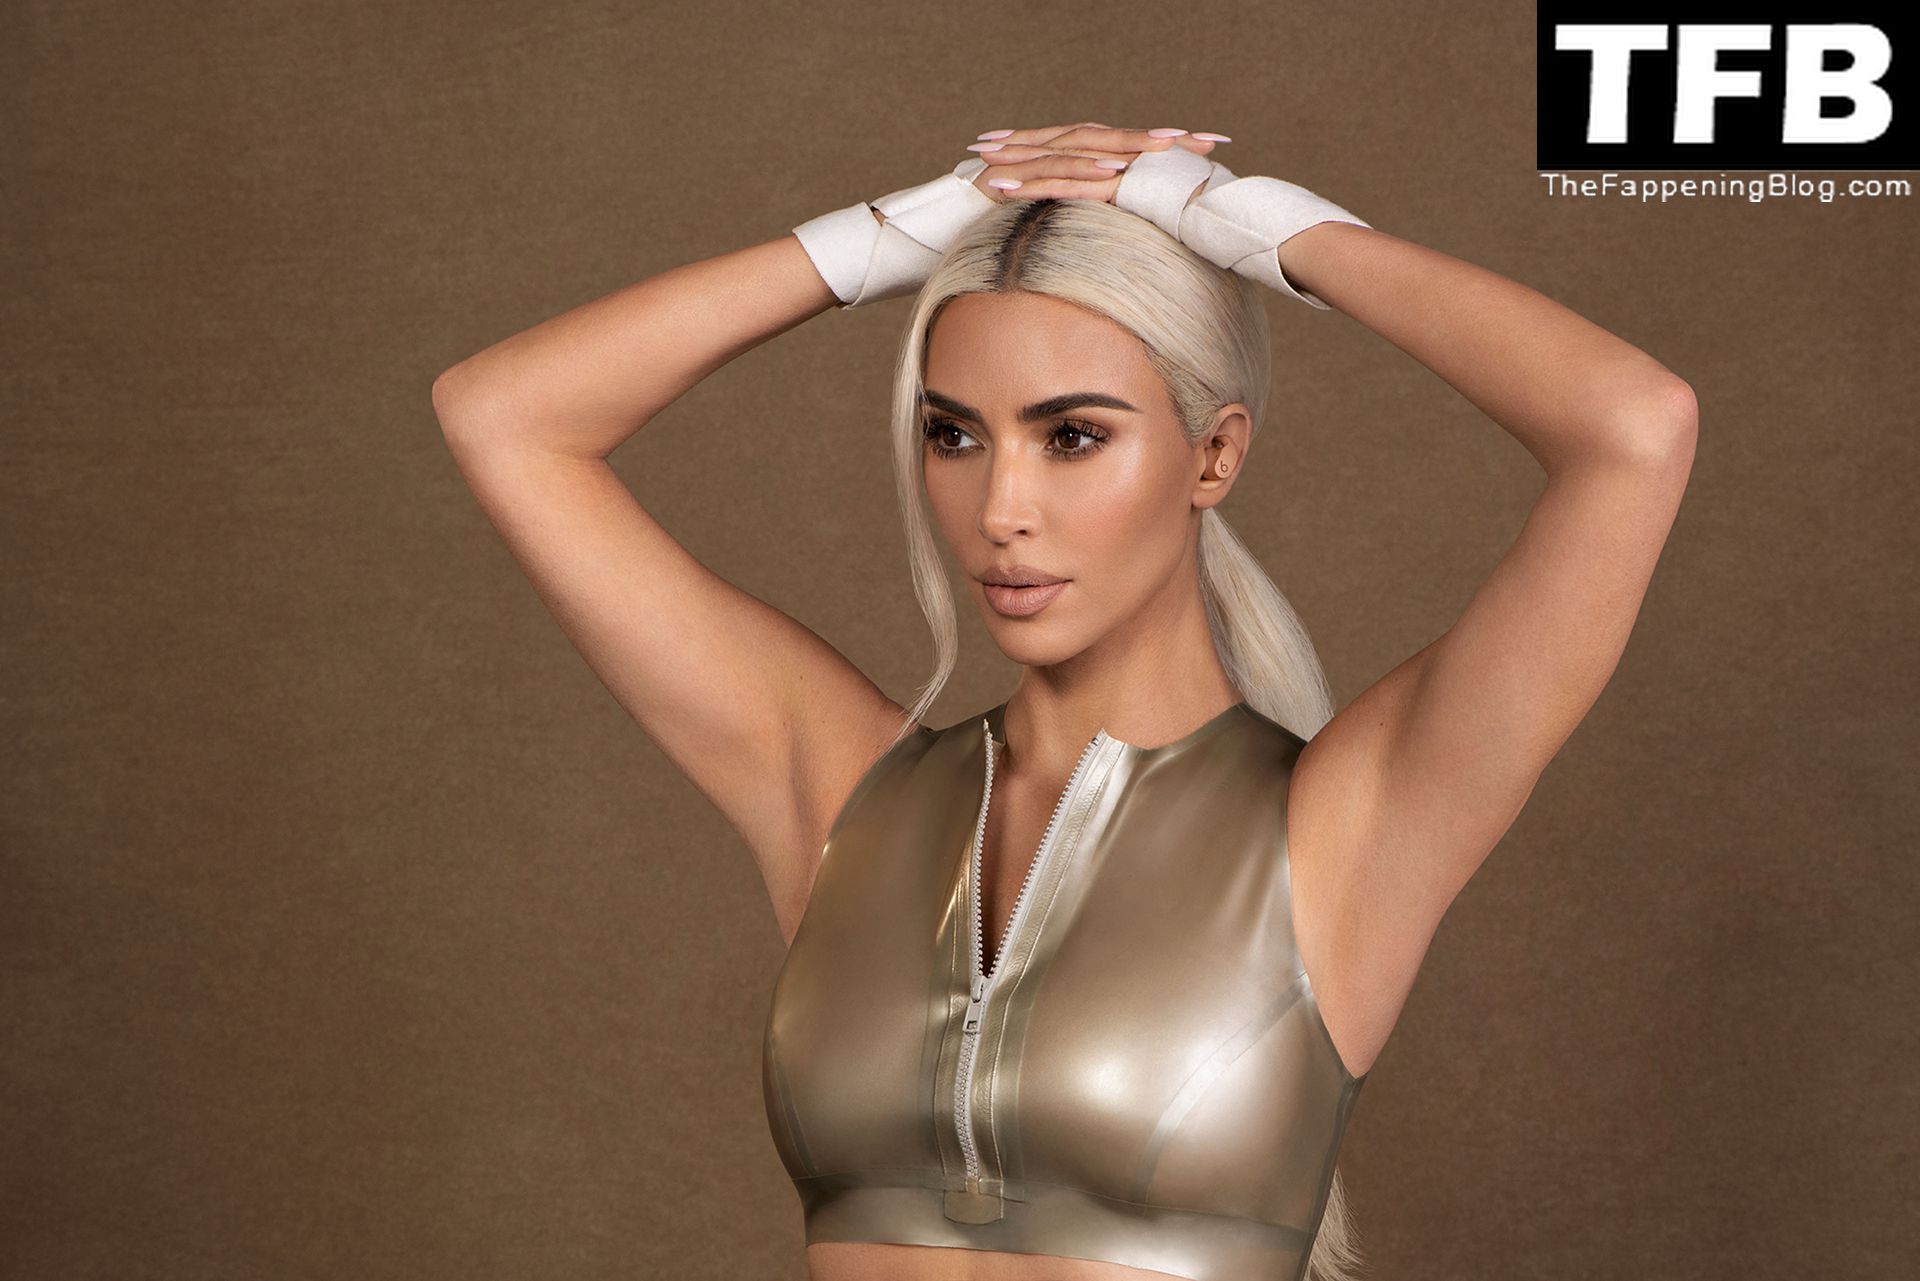 Kim Kardashian Sexy The Fappening Blog 2 - Kim Kardashian Promotes “Beats x Kim” Wireless Airbuds in a Sexy Shoot (9 Photos)